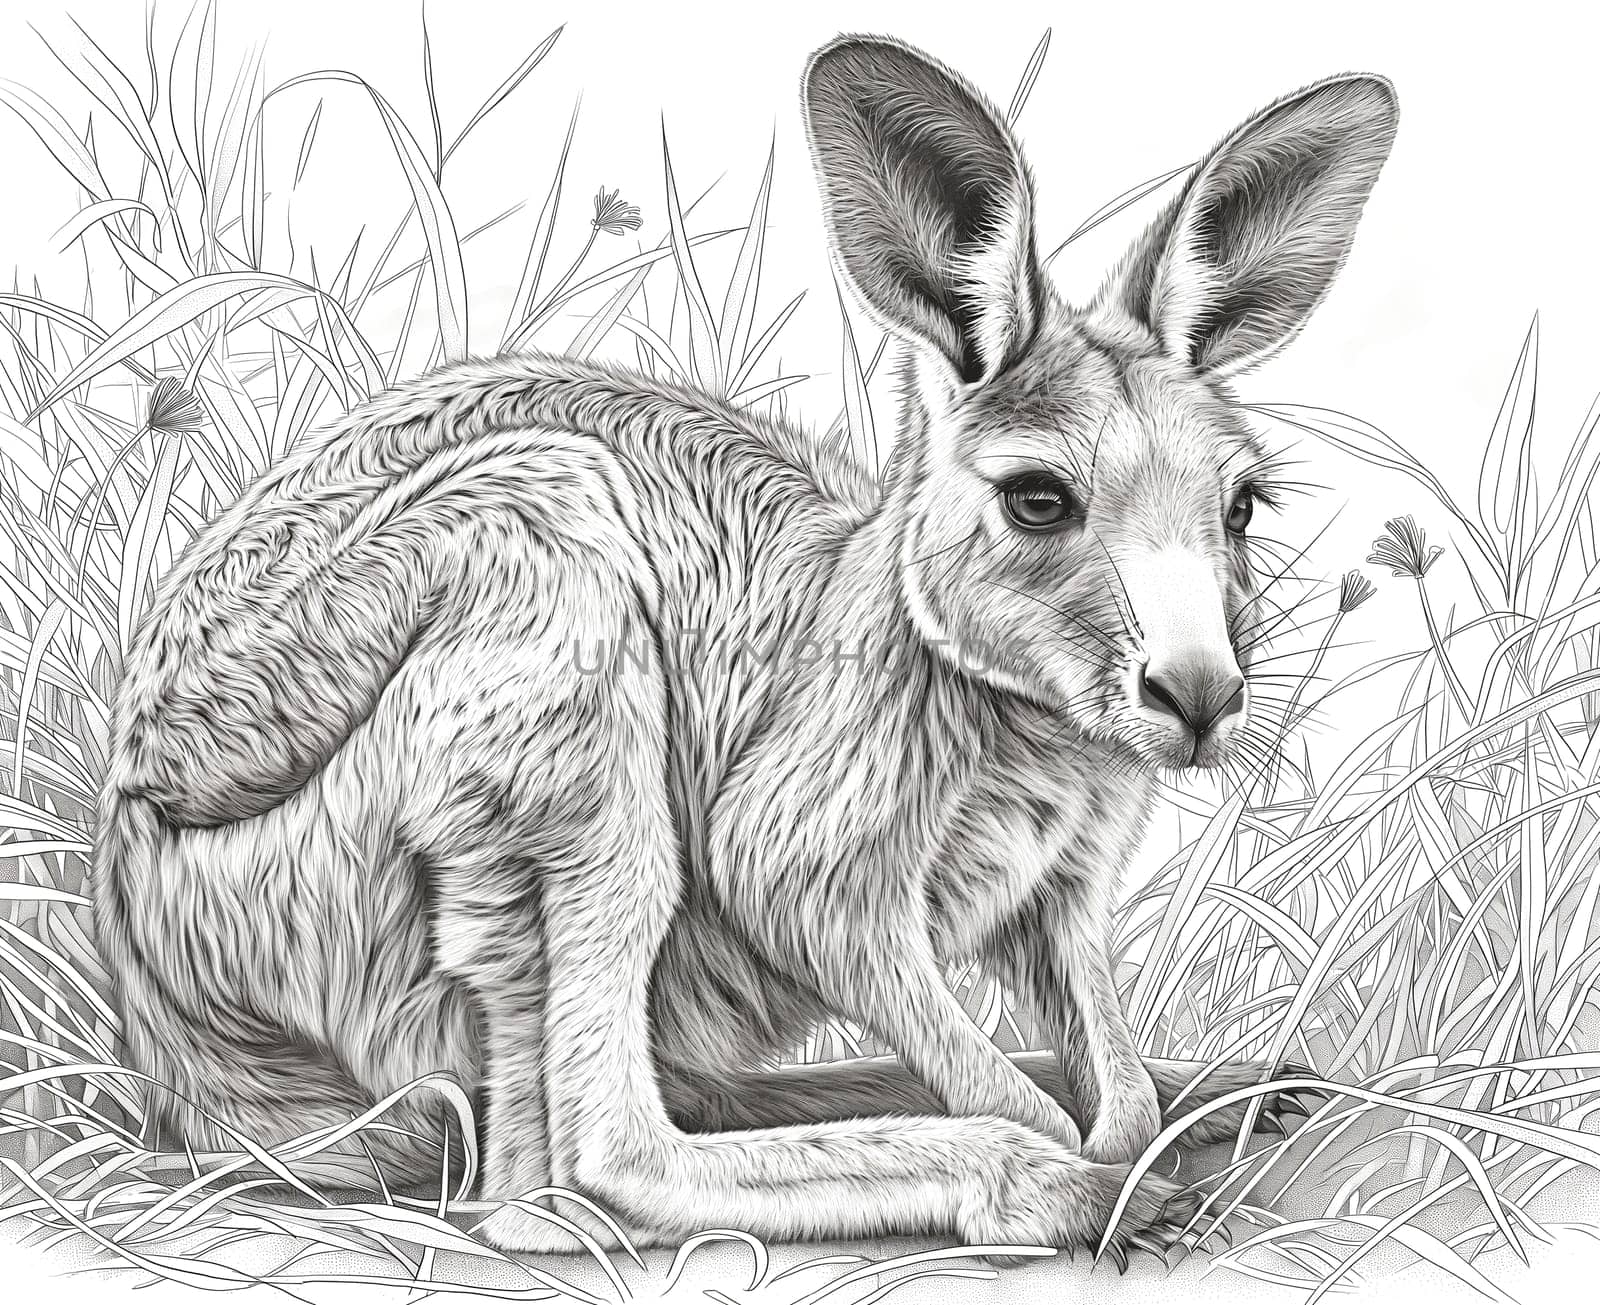 Coloring book for kids, animal coloring, kangaroo. by Fischeron